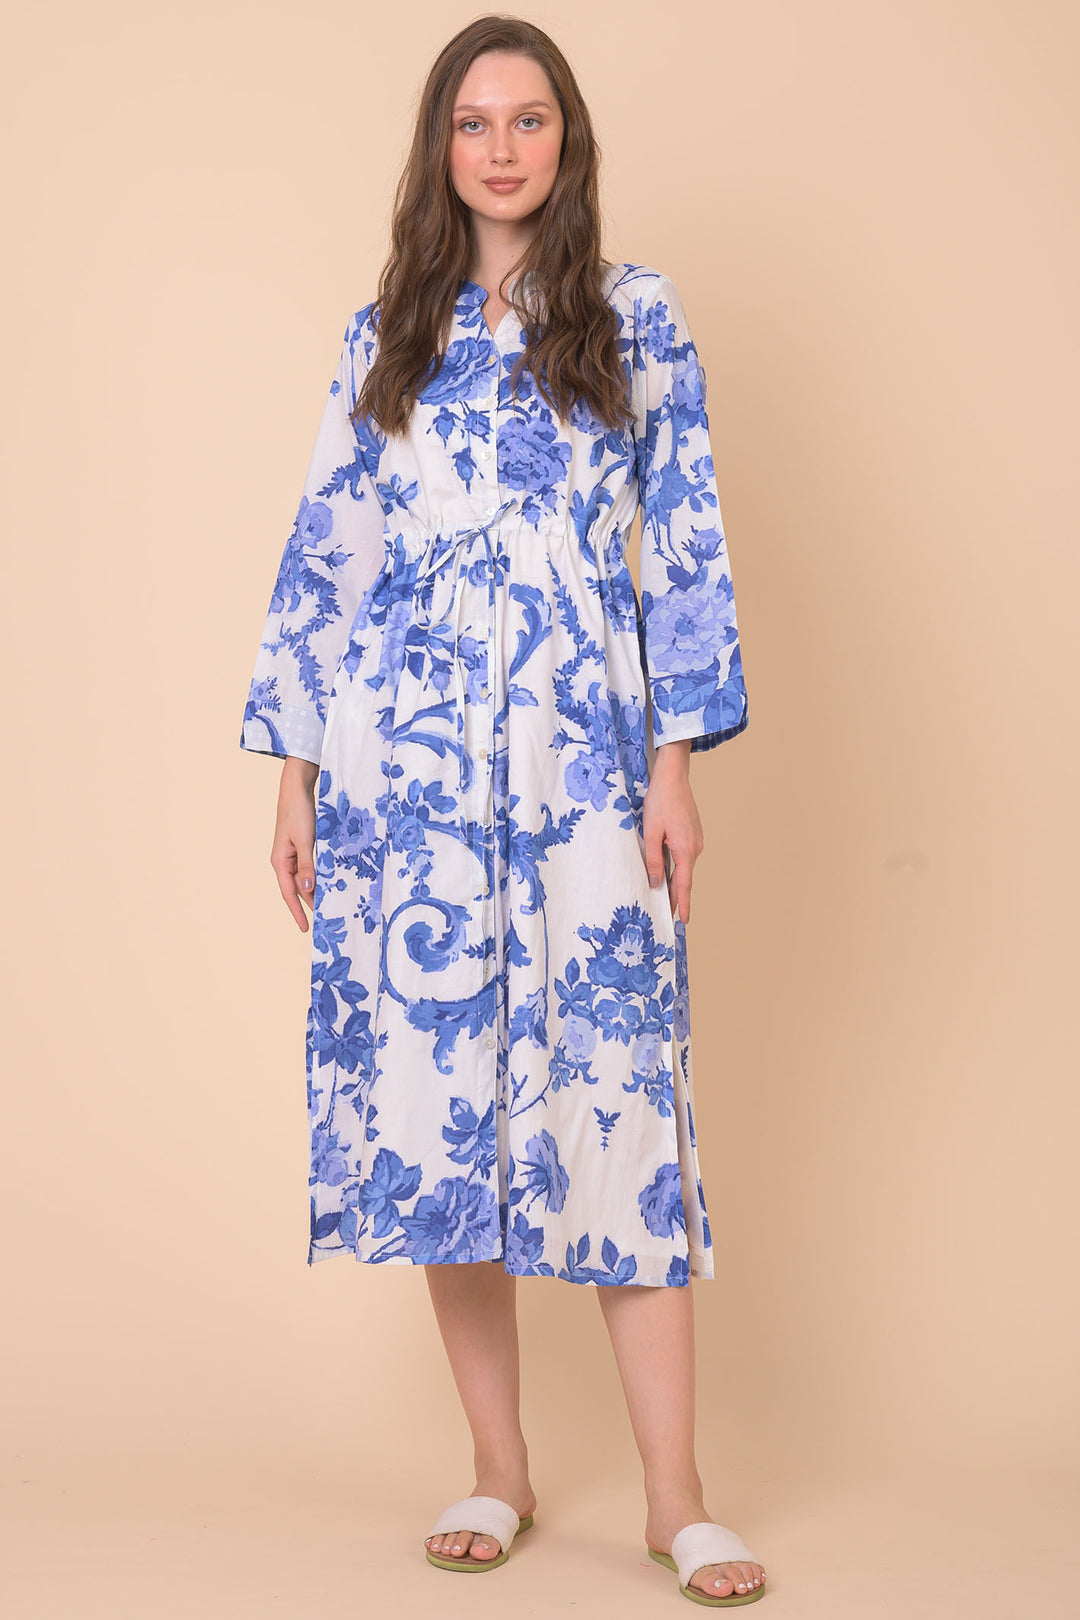 Handprint Dream Apparel AN842F Clara Peony Blue Floral Print Shirt Dress - Olivia Grace Fashion